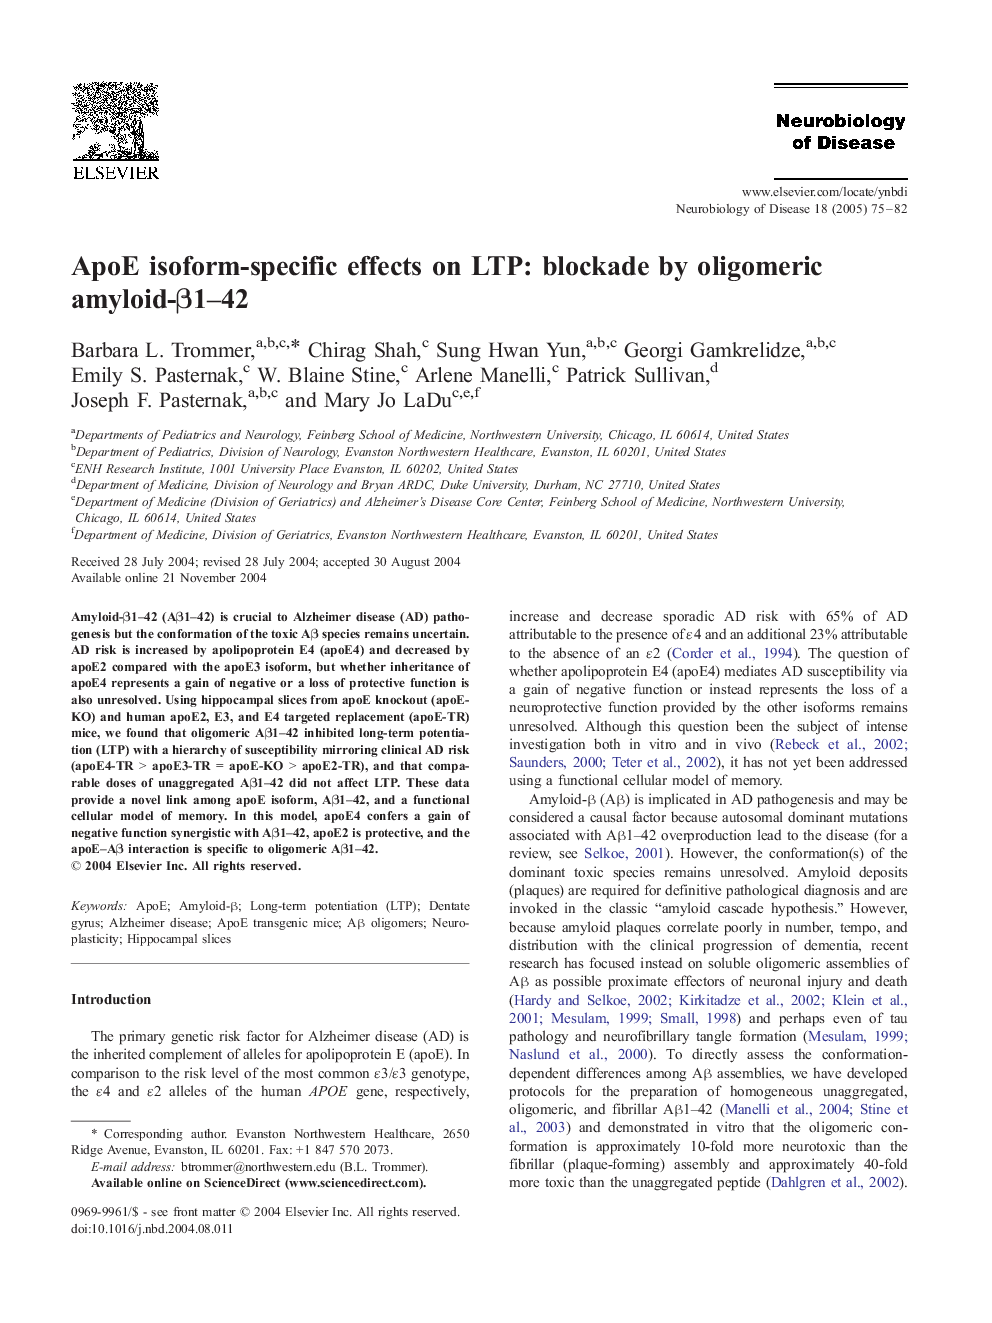 ApoE isoform-specific effects on LTP: blockade by oligomeric amyloid-Î²1-42